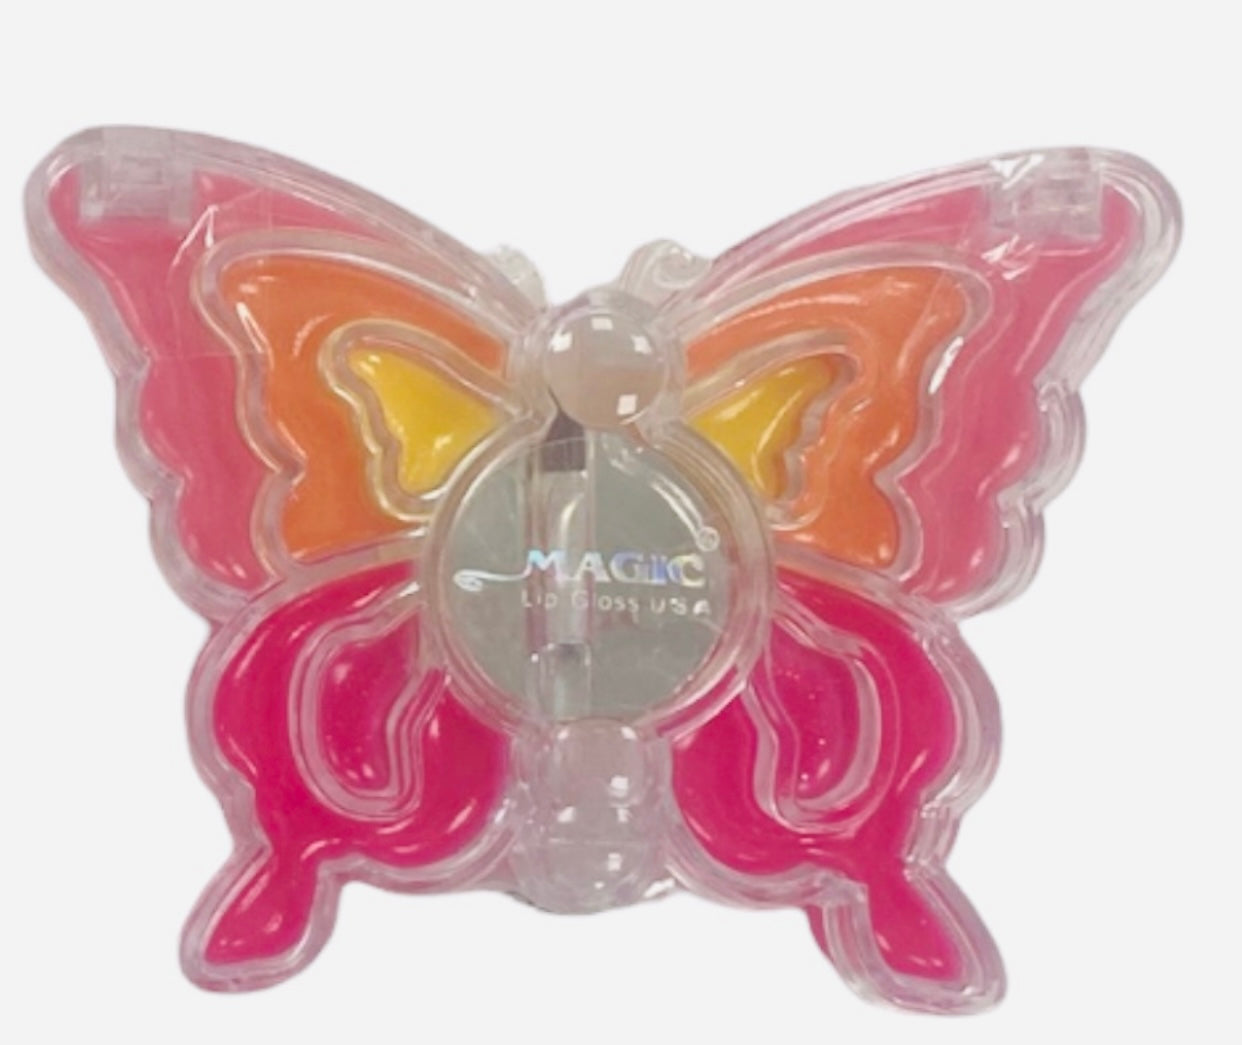 Lipgloss Butterfly